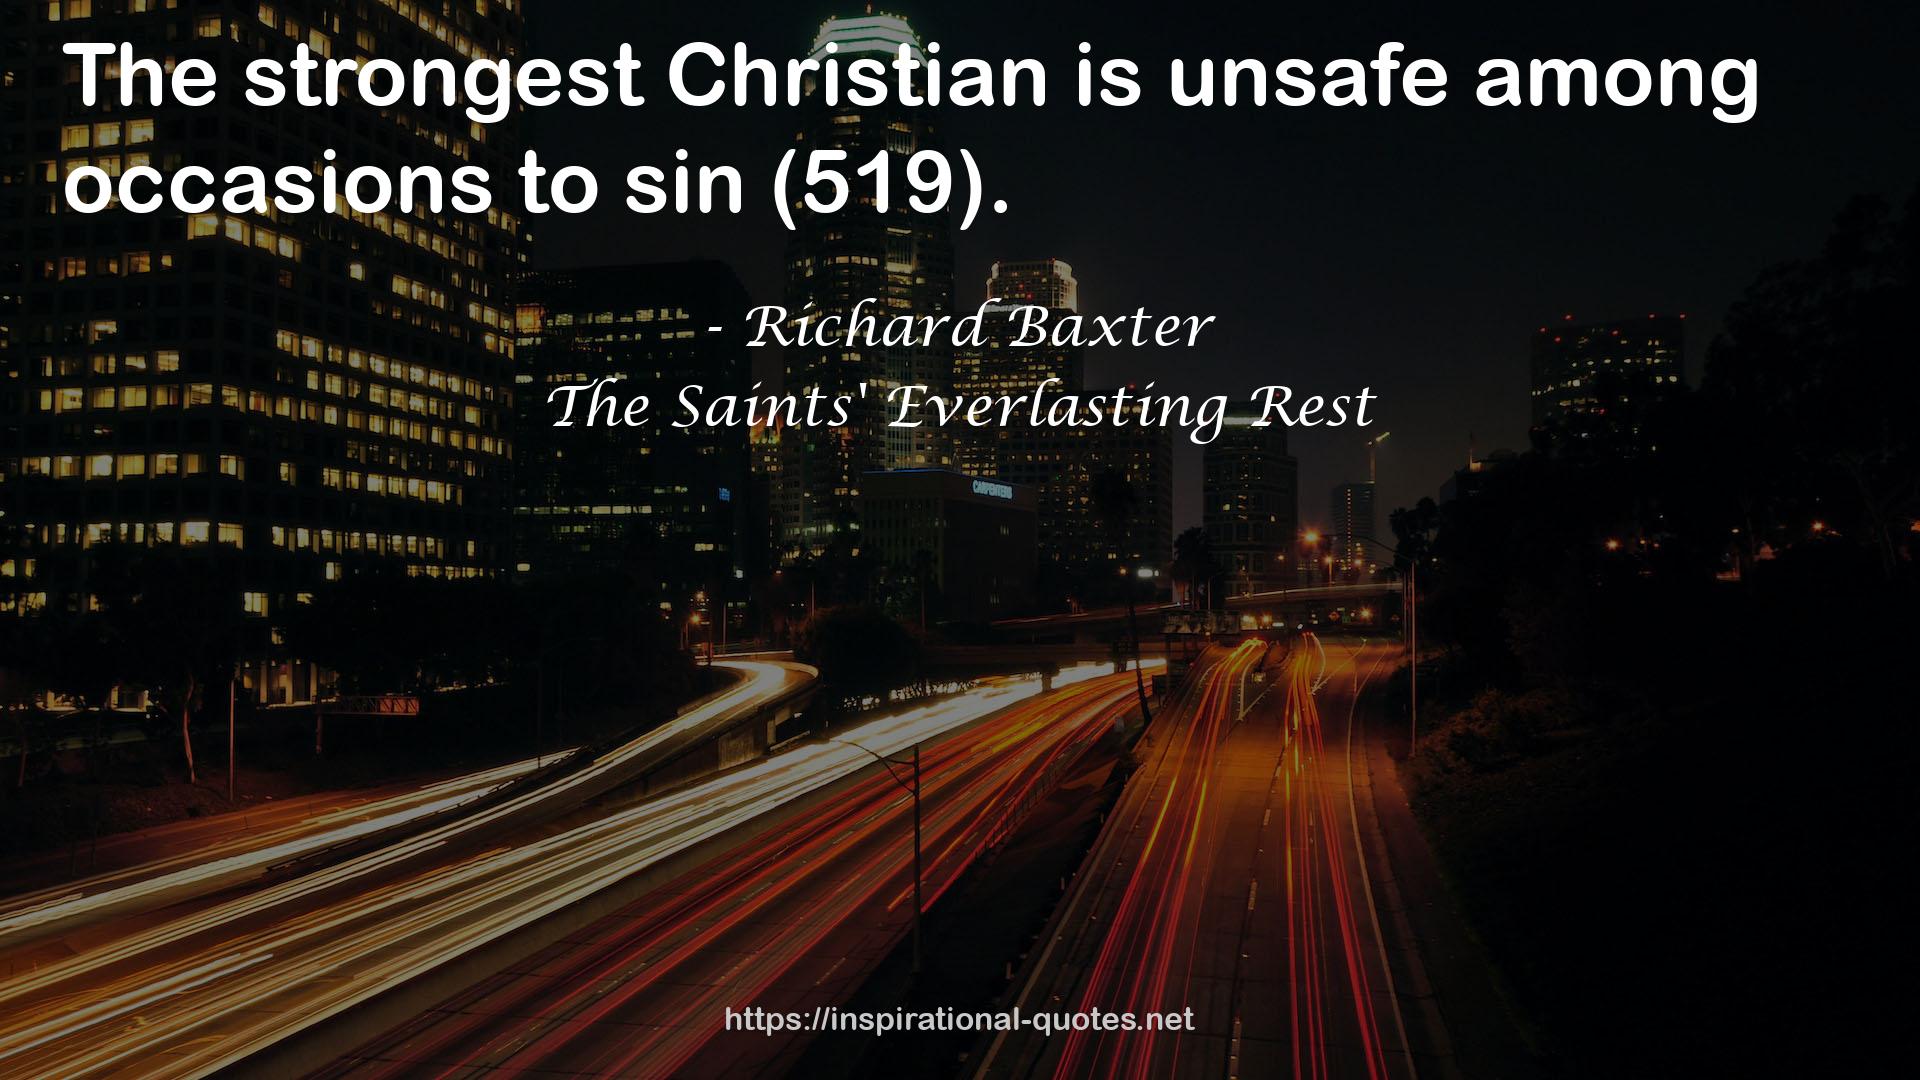 The Saints' Everlasting Rest QUOTES